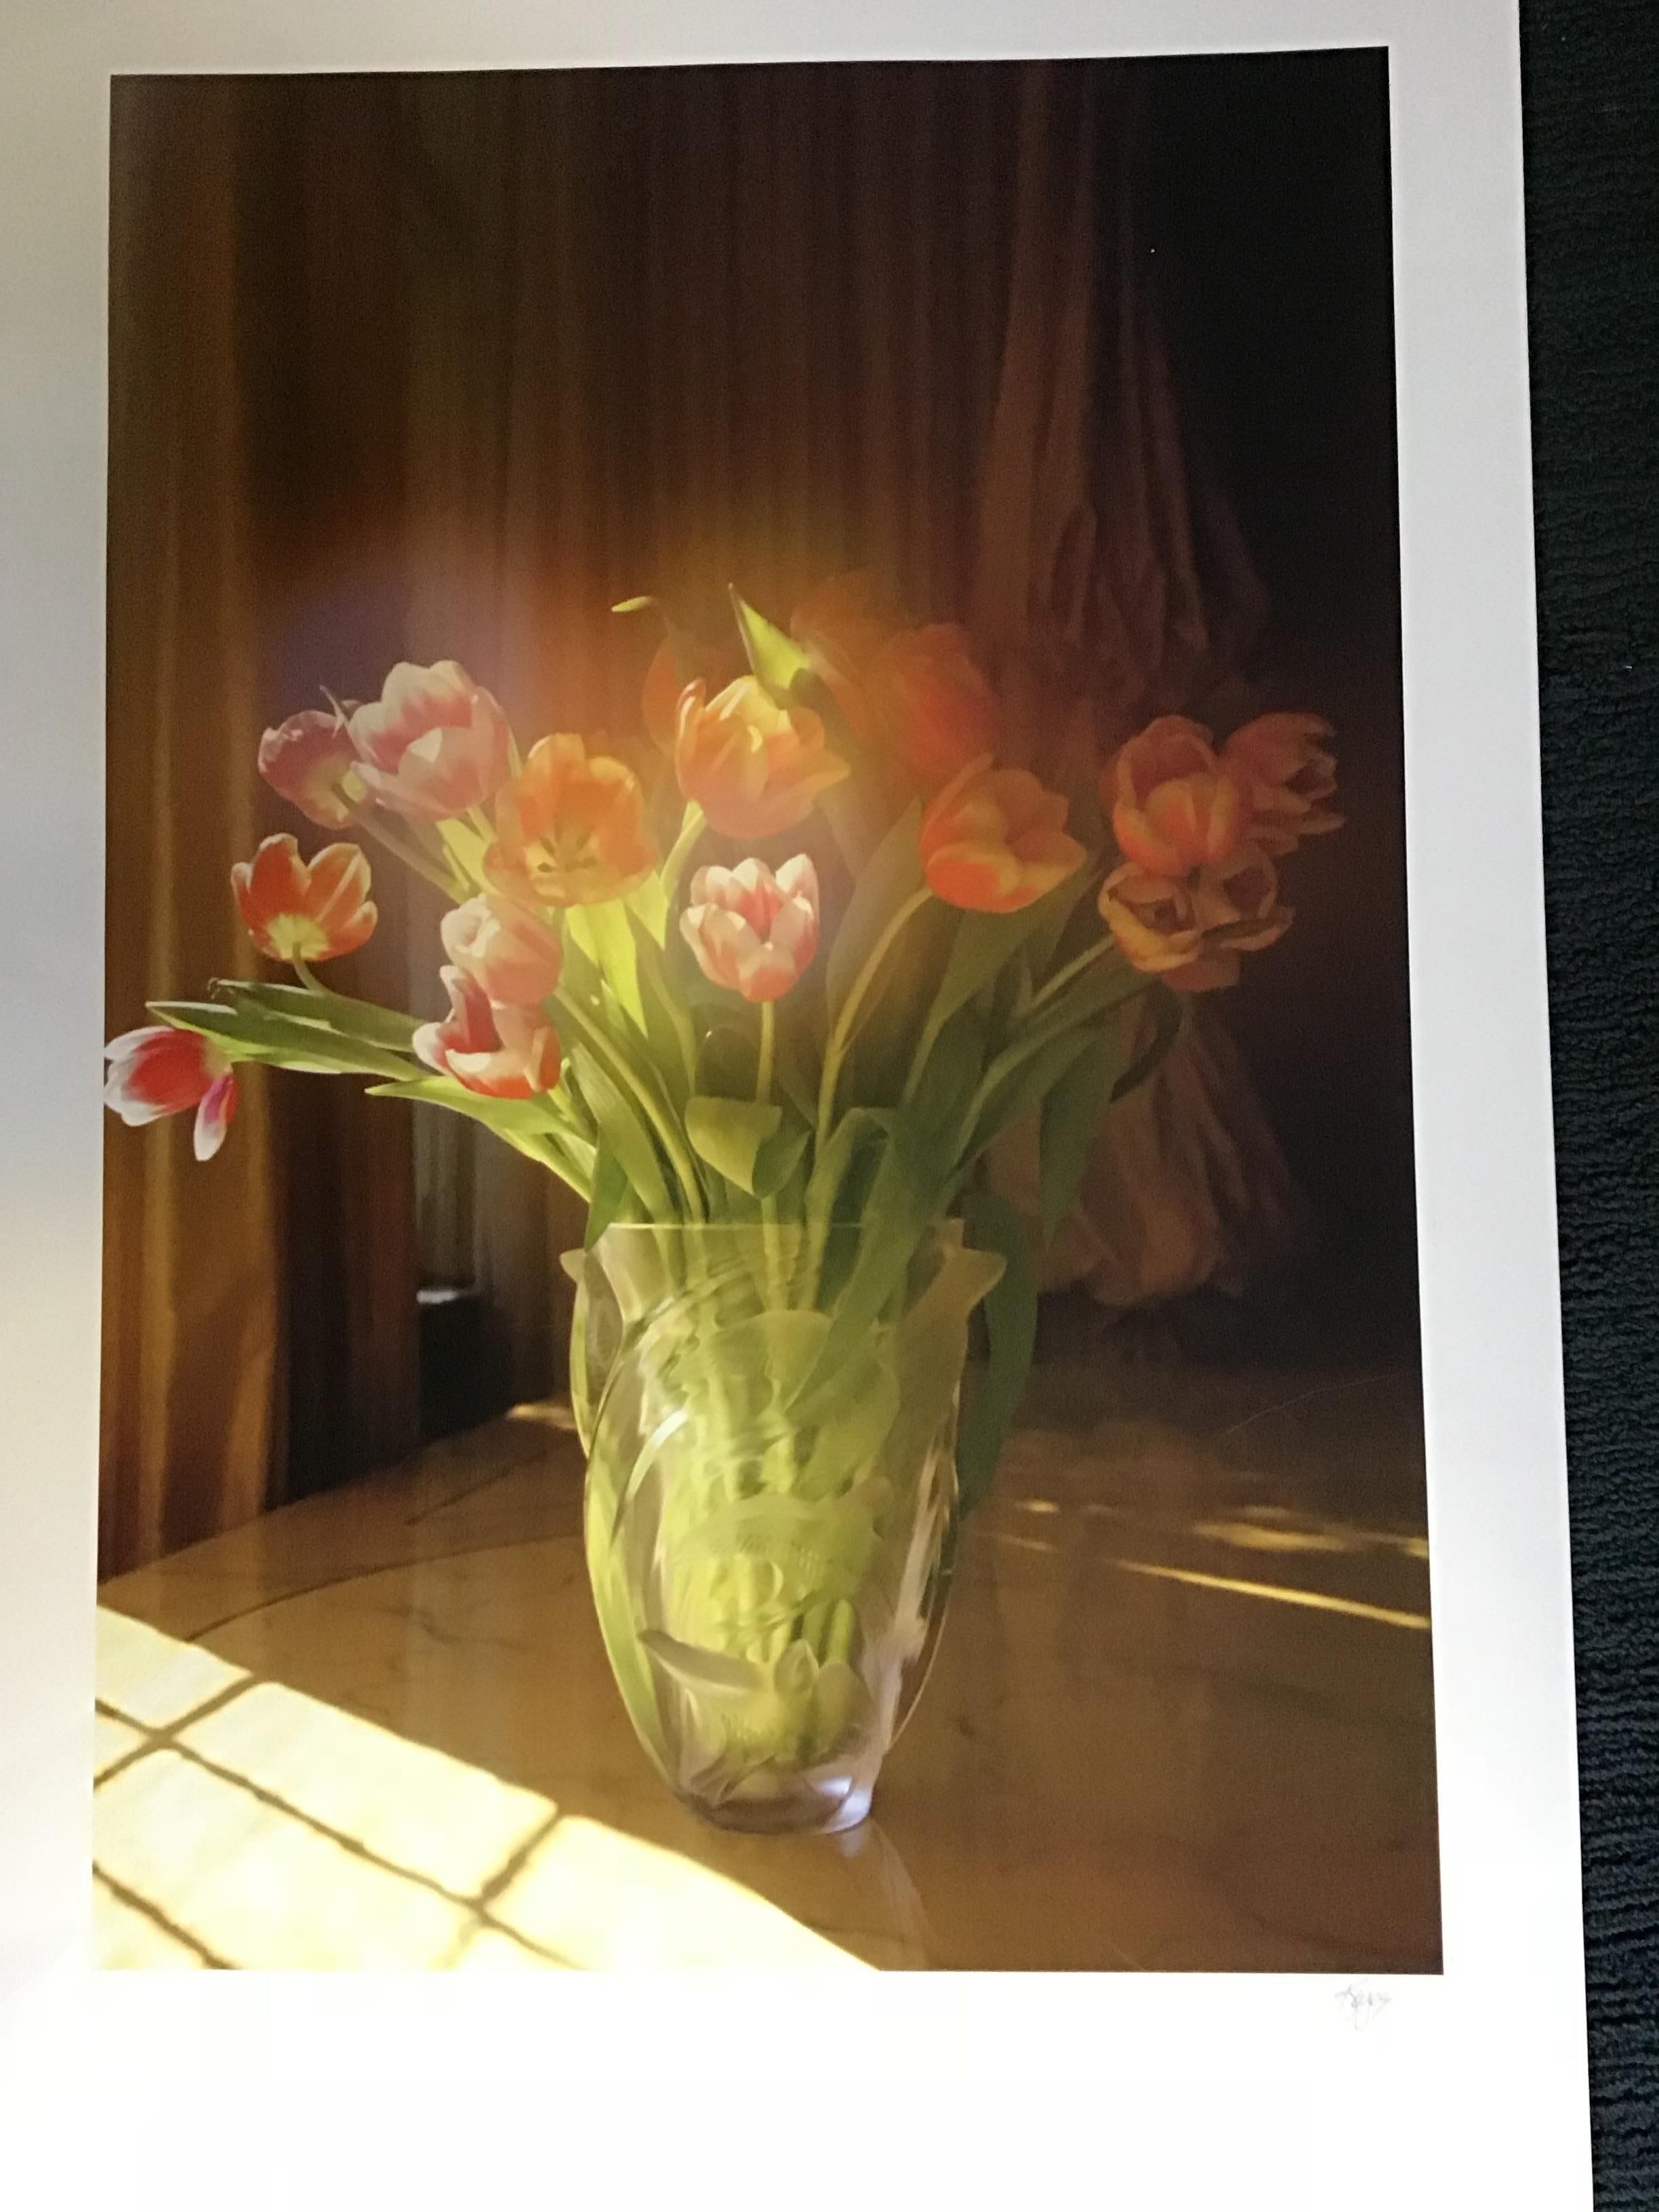 Glowing tulips - Mixed Media Art by bruce keyes